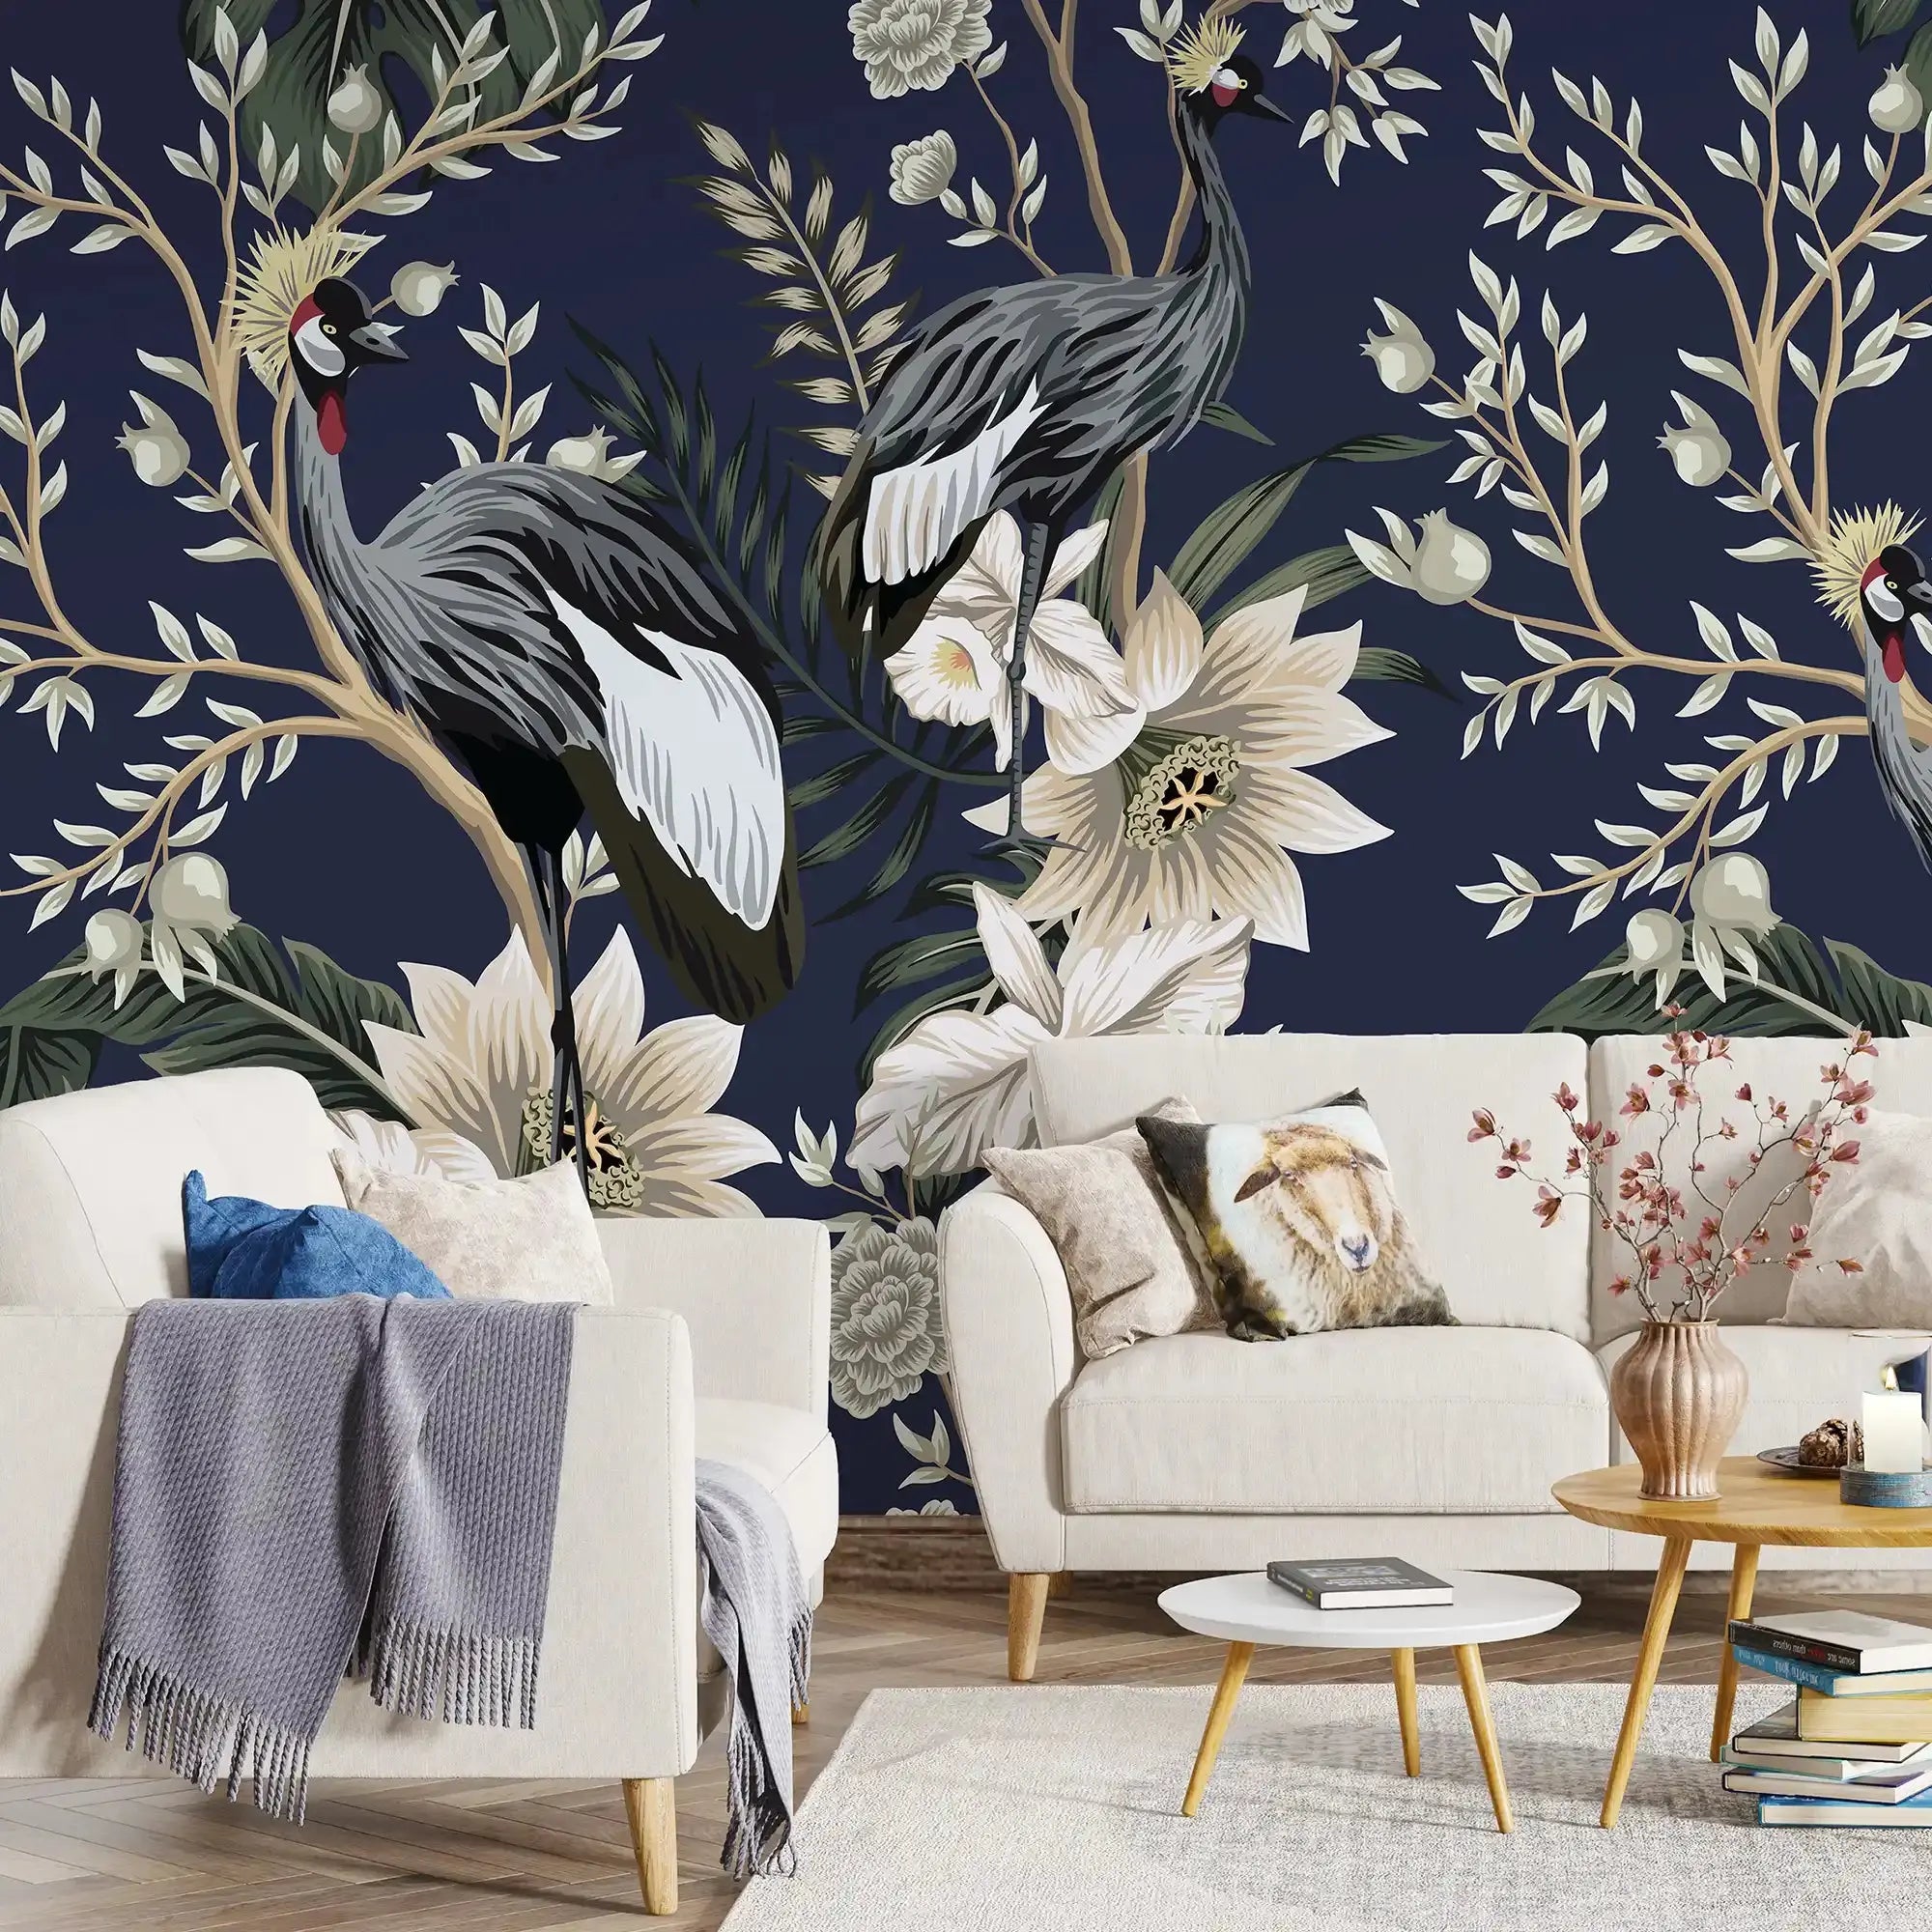 3101-C / Tropical Baroque Wallpaper Peel and Stick Crane and Flower Design Adhesive Wall  Mural - Artevella